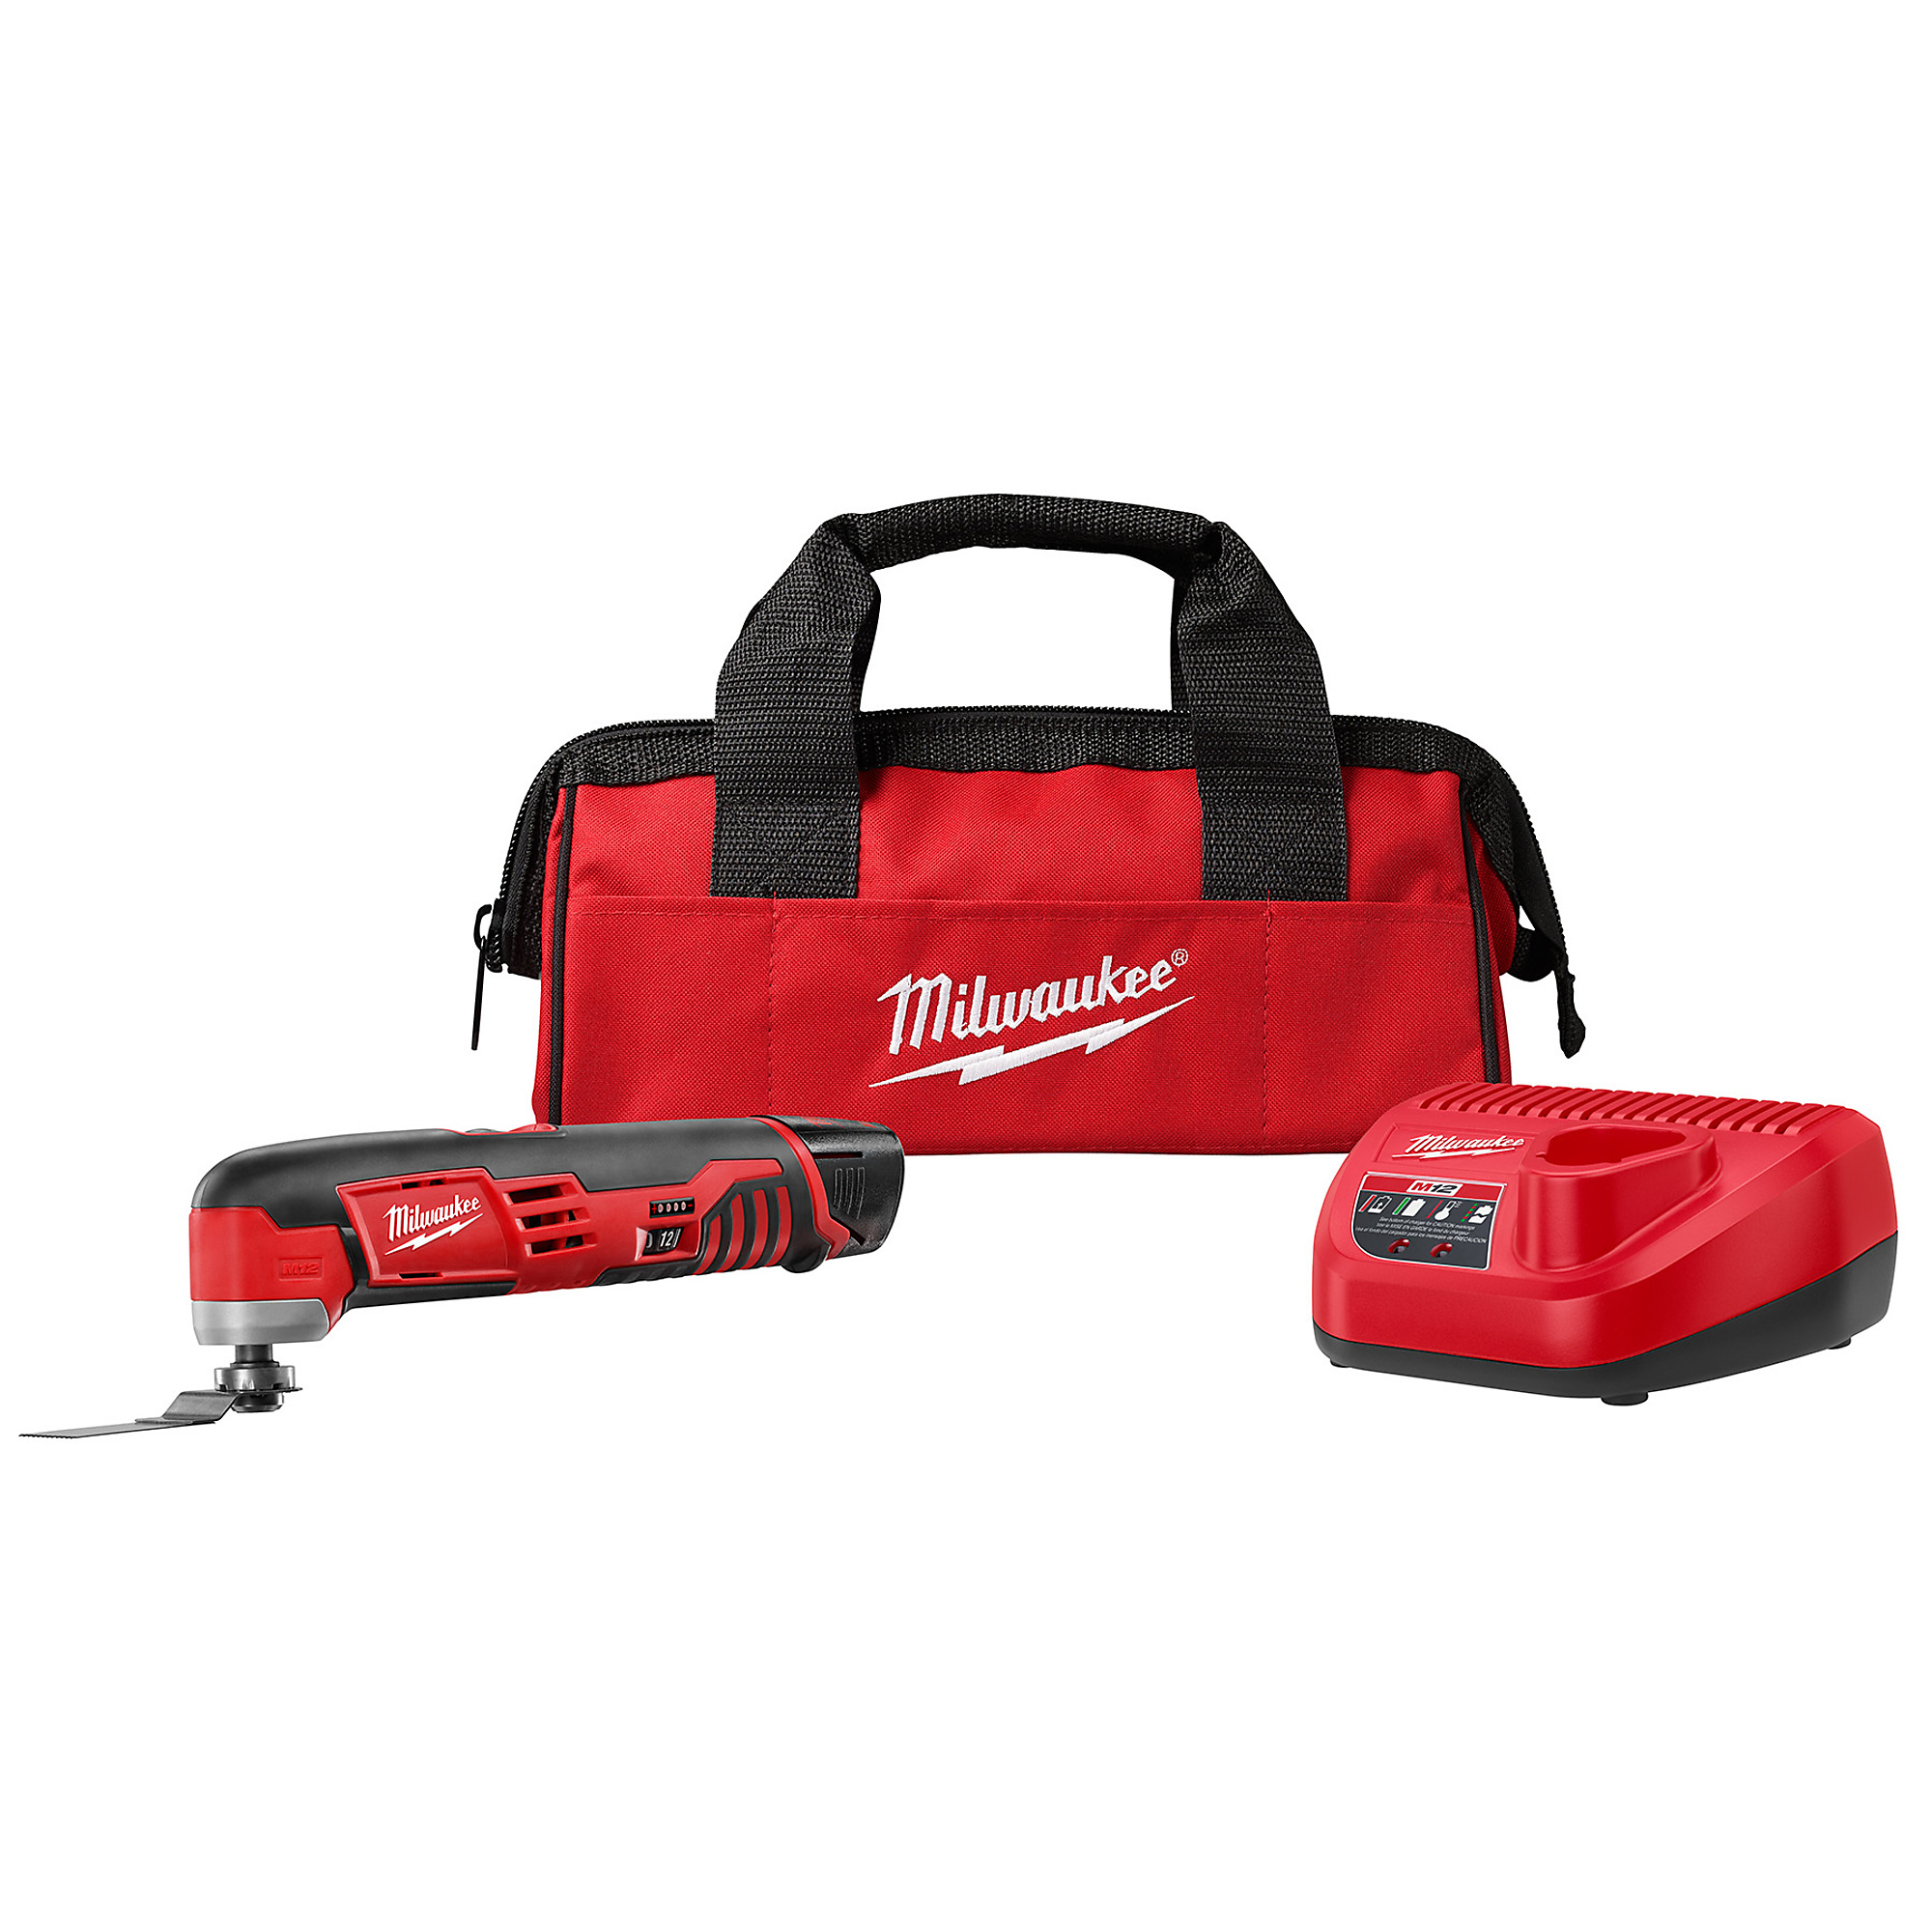 Milwaukee, M12 Cordless LITHIUM-ION Multi-Tool Kit, Max. Speed 20000 OPM, Model 2426-21